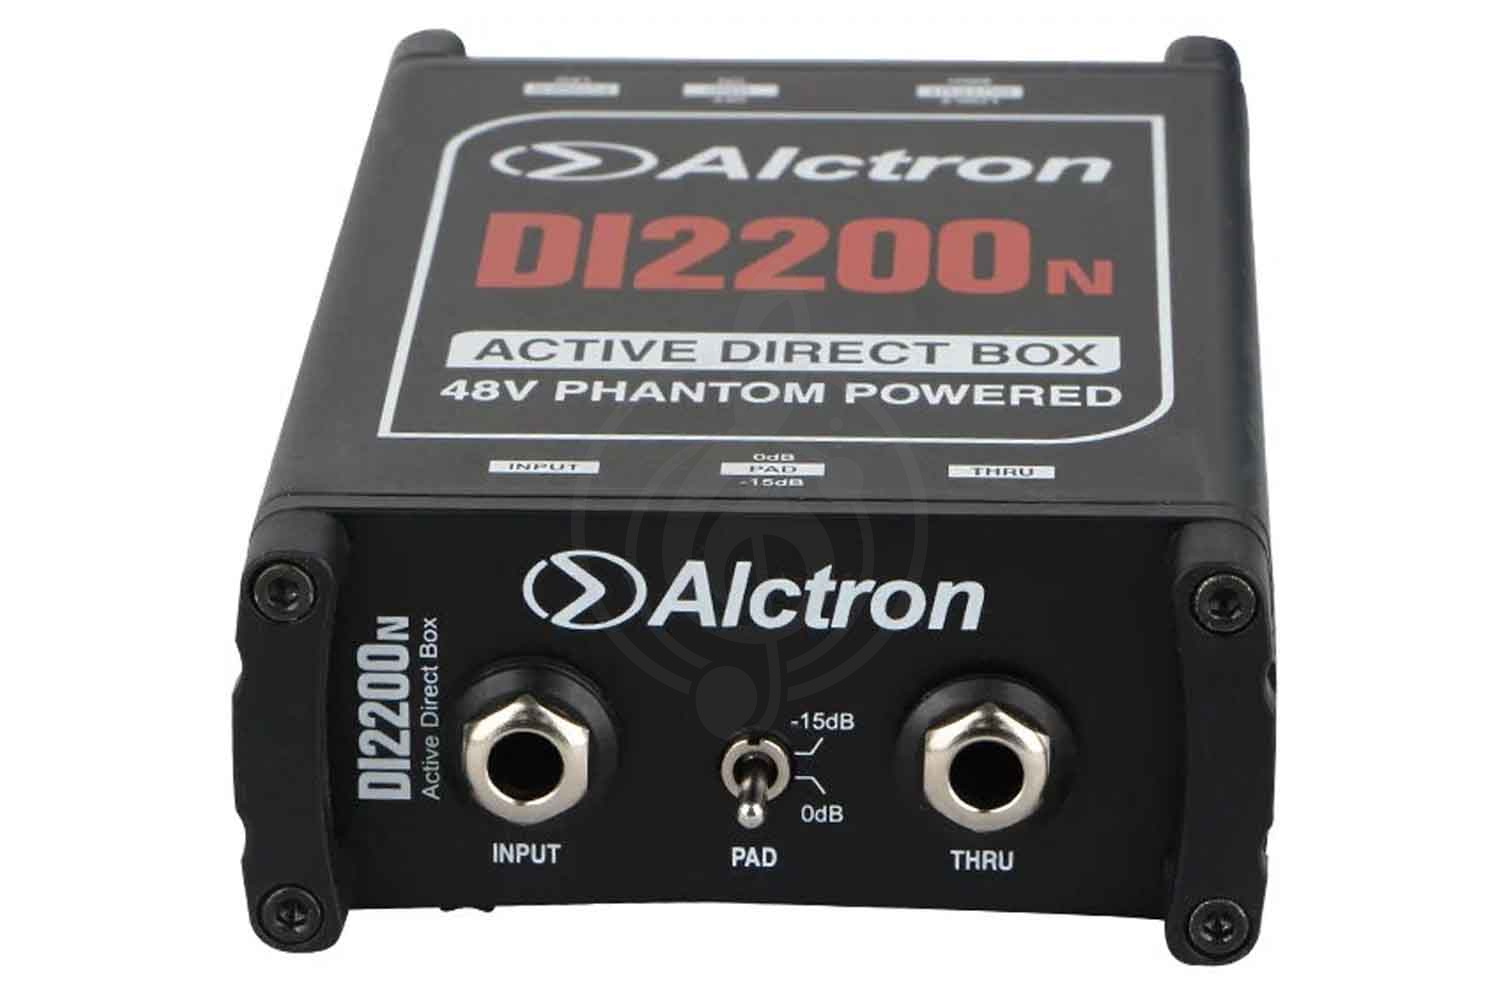 DI бокс, директ бокс, дибокс Alctron DI2200N D.I. Box - Преобразователь акустического сигнала, Alctron DI2200N D.I. Box в магазине DominantaMusic - фото 3